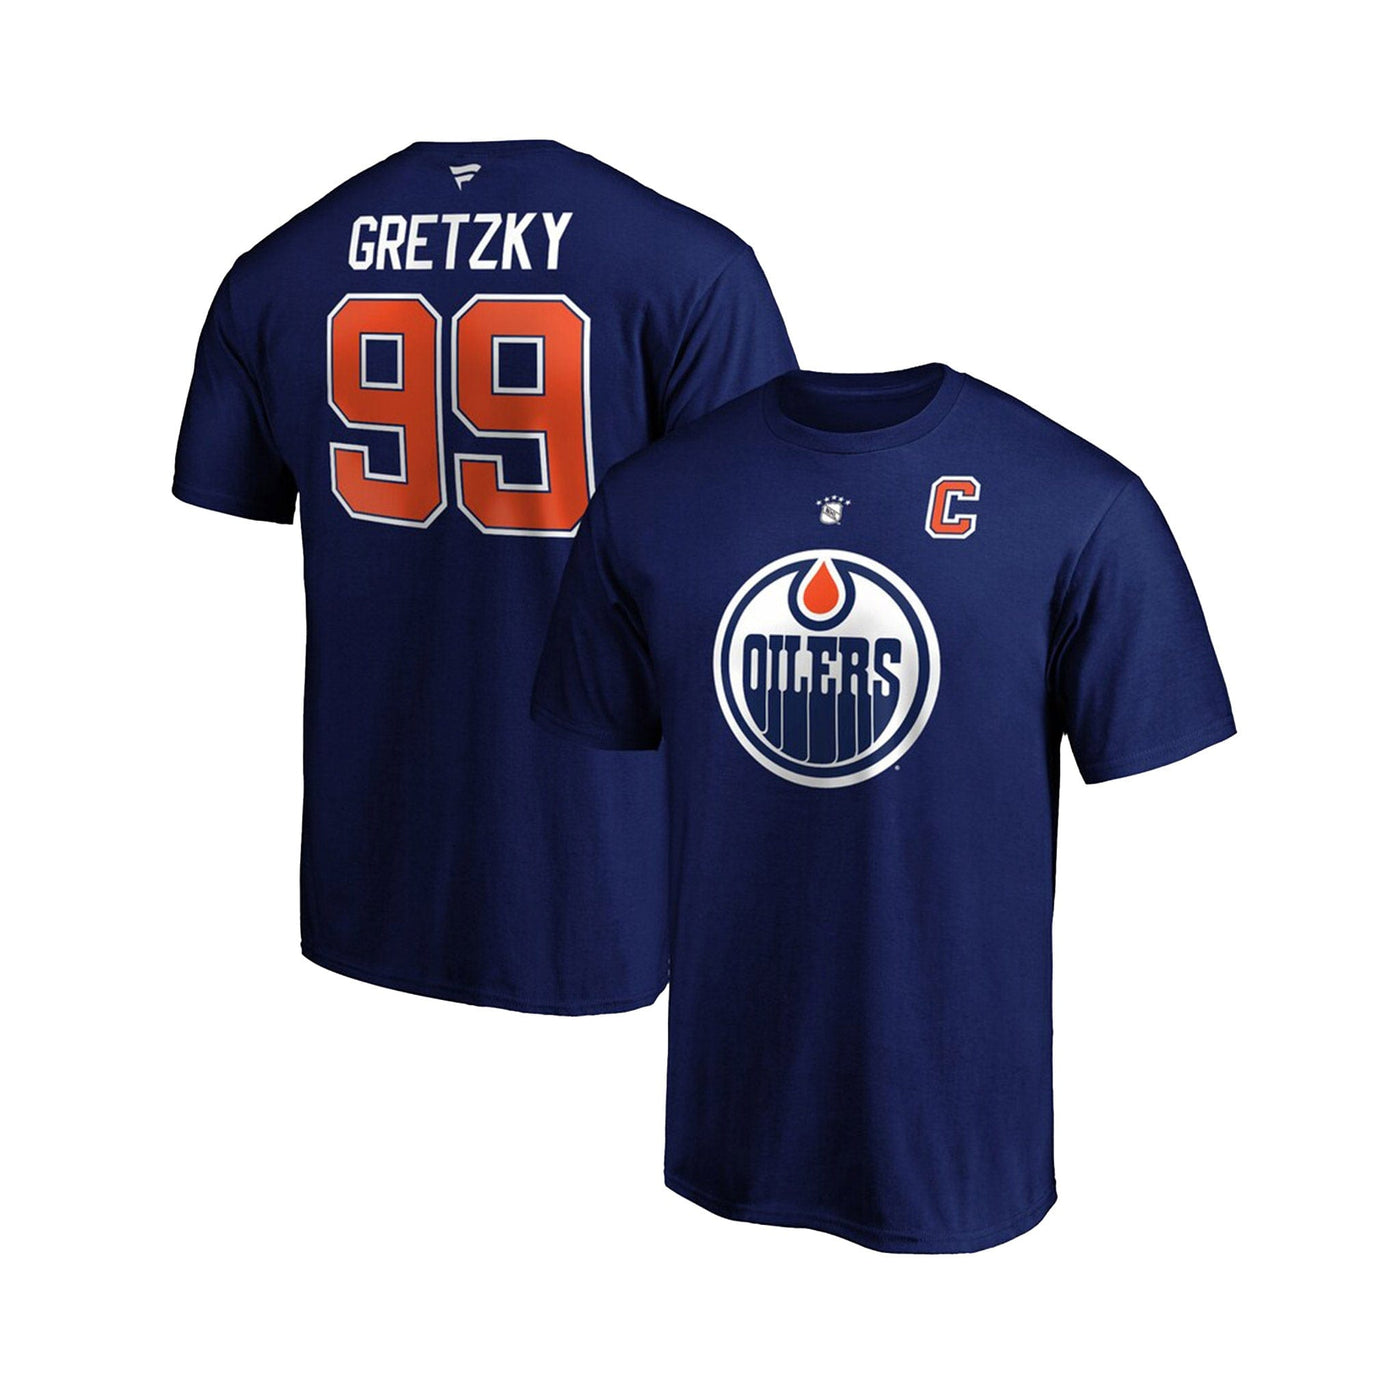 Edmonton Oilers Fanatics Retired N&N Mens Shirt - Wayne Gretzky